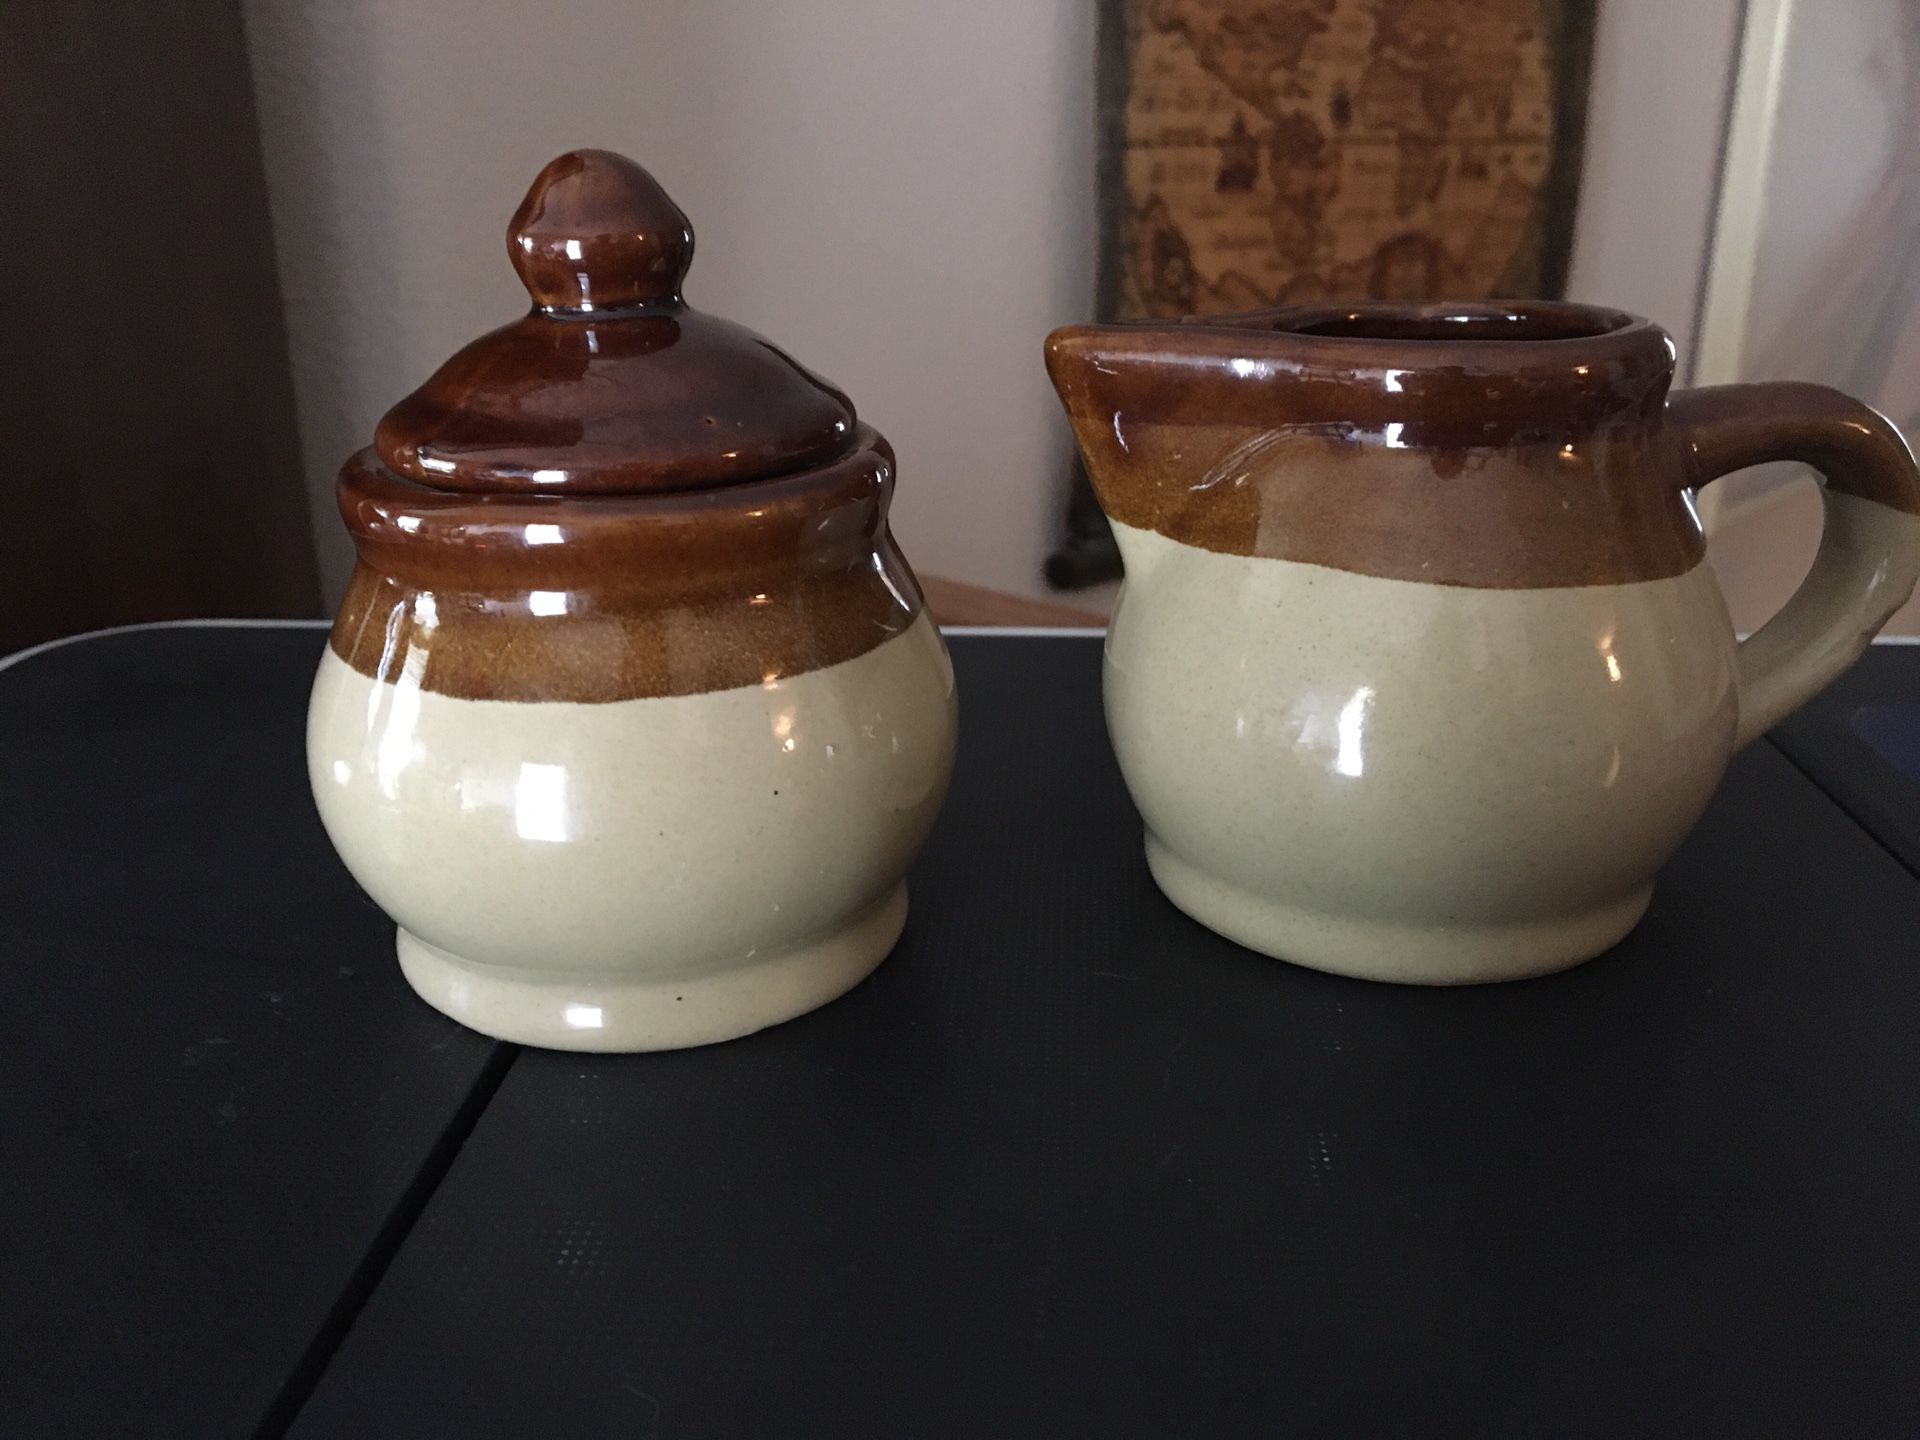 Sugar and creamer ceramic set